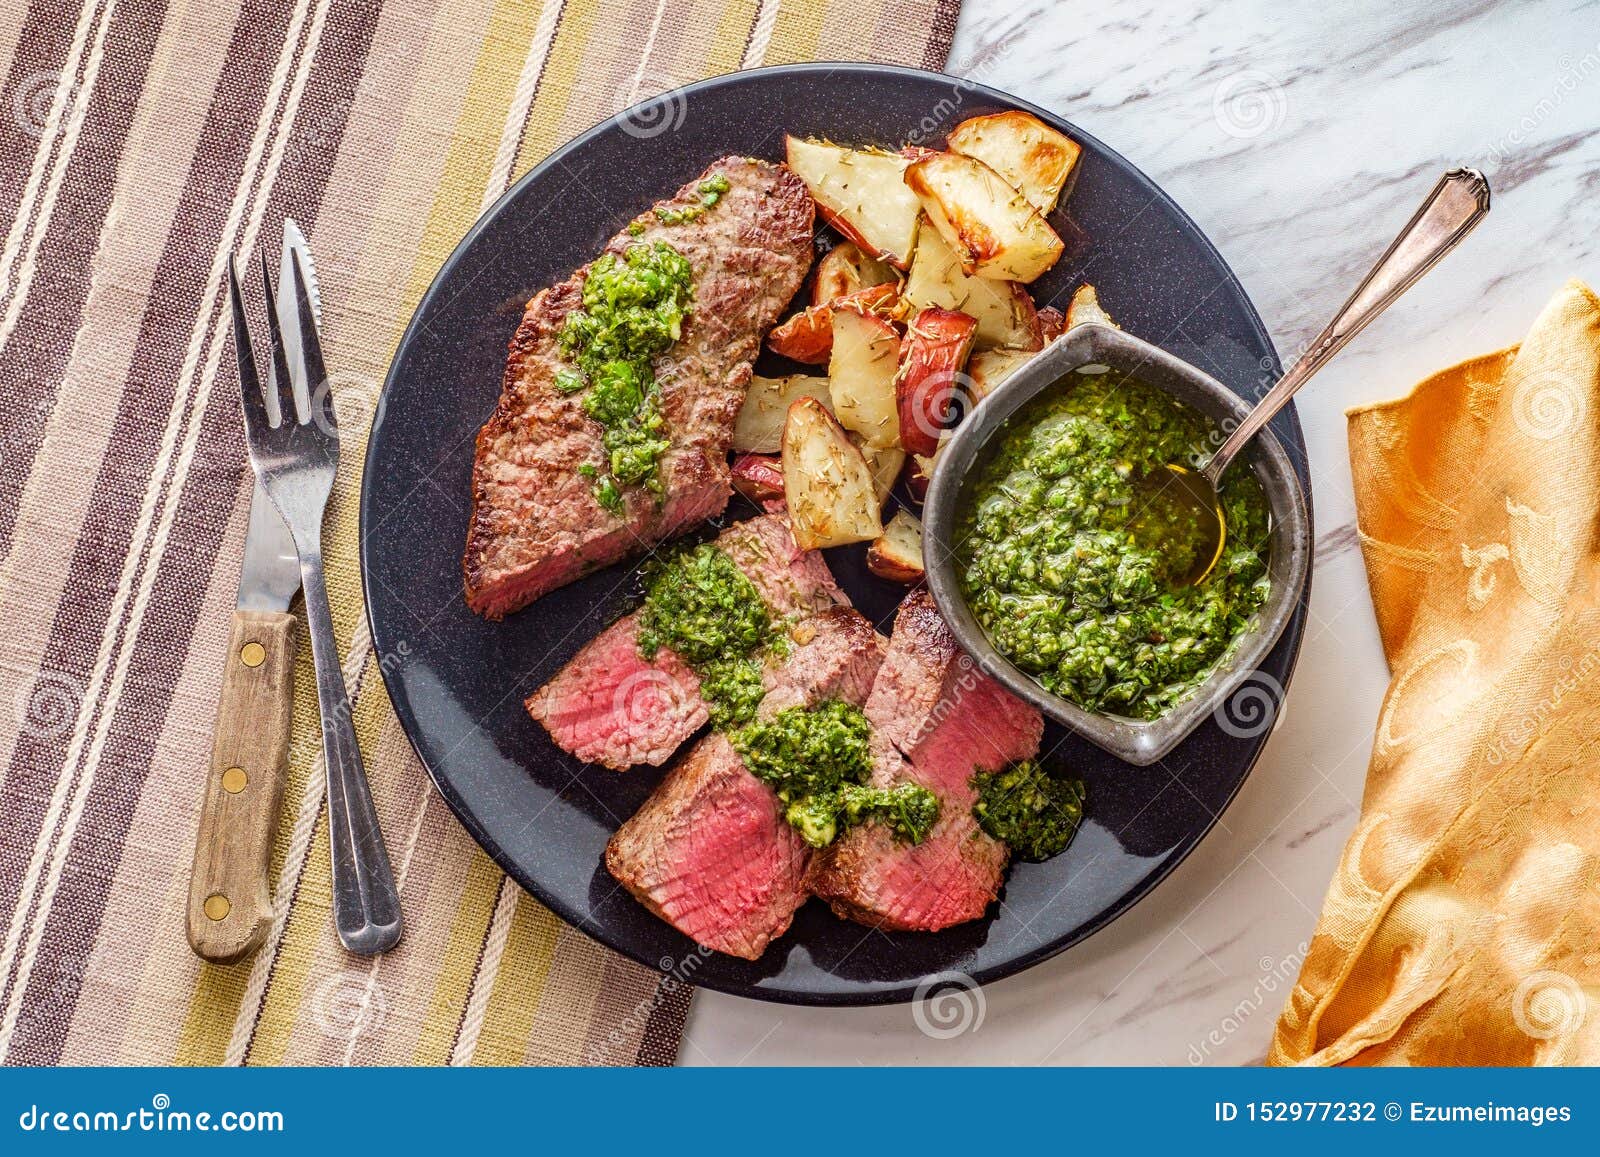 chimichurri steak and potatoes